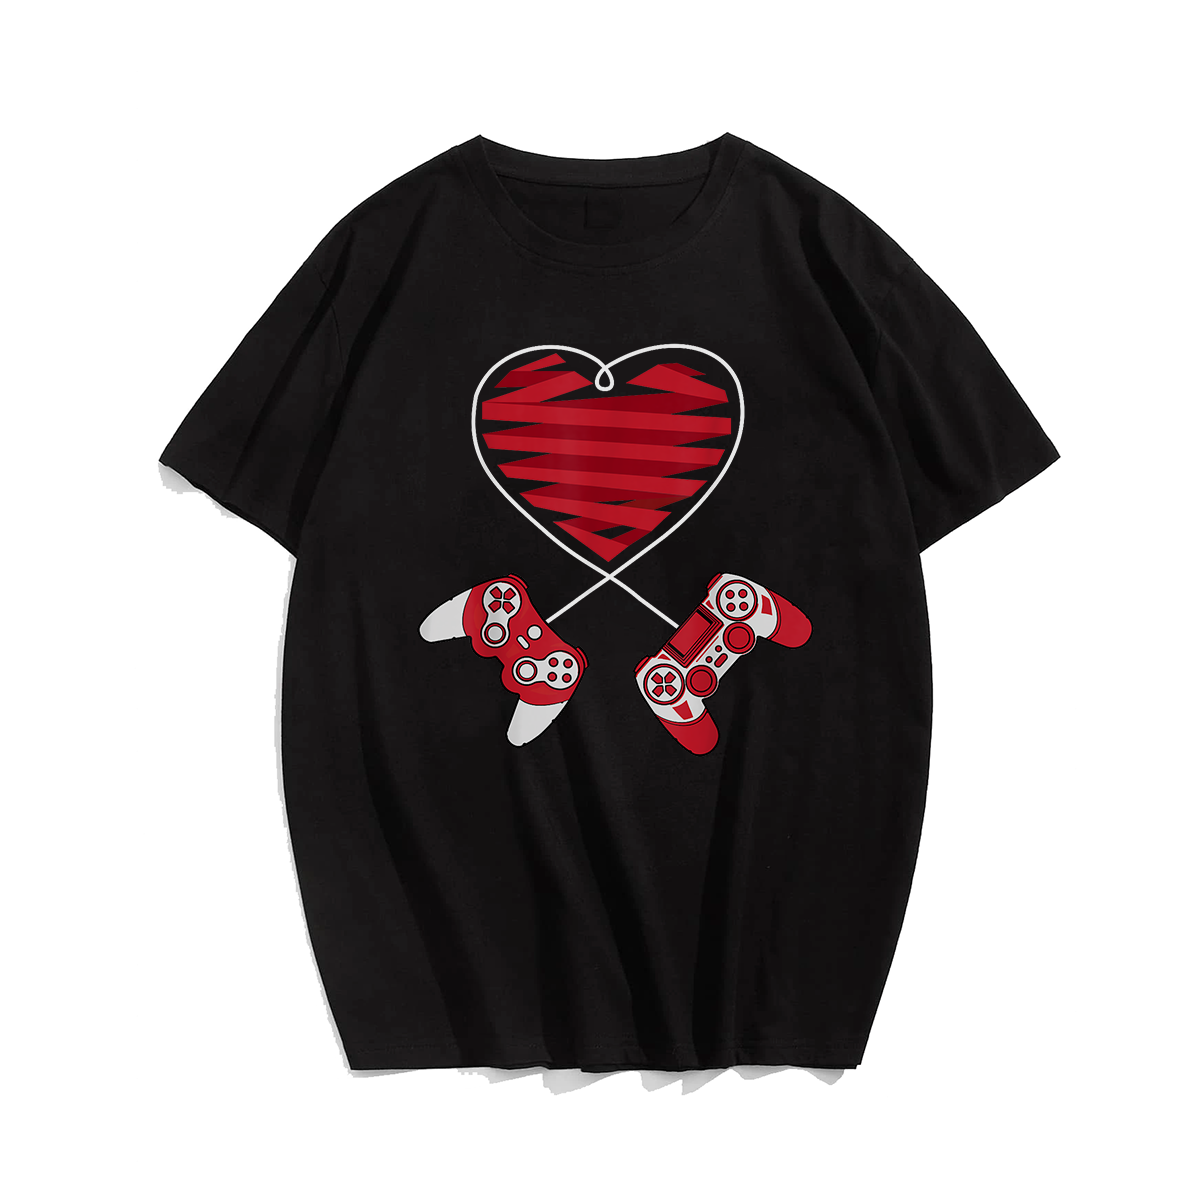 Gamer Shirt Controller Valentine Valentines Day T-Shirt, Men Plus Size Oversize T-shirt for Big & Tall Man